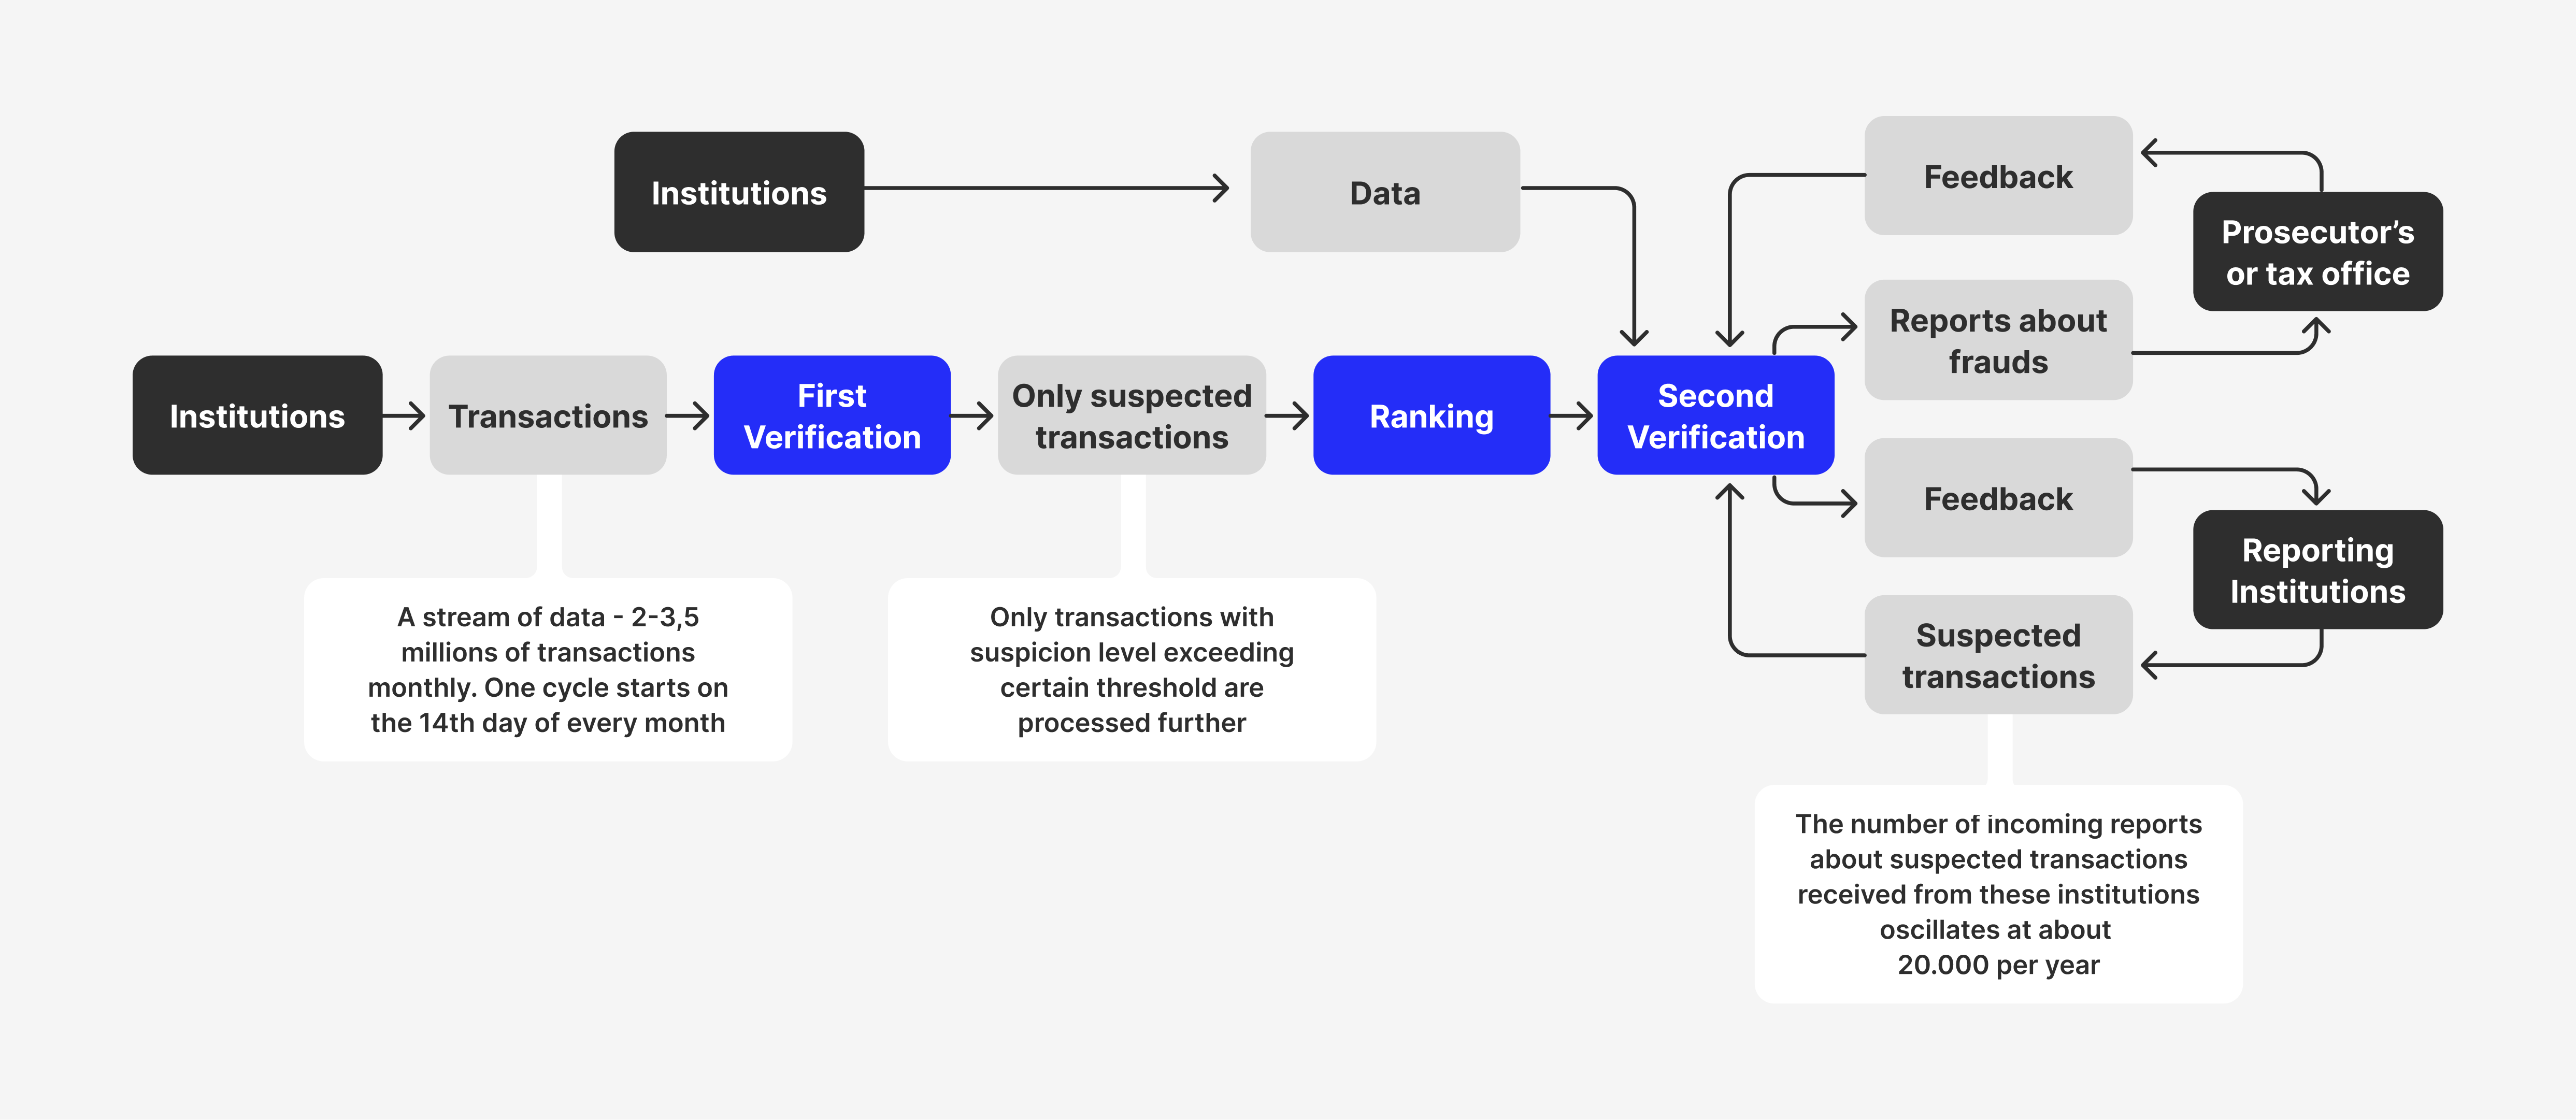 process of monitoring and checking transactions